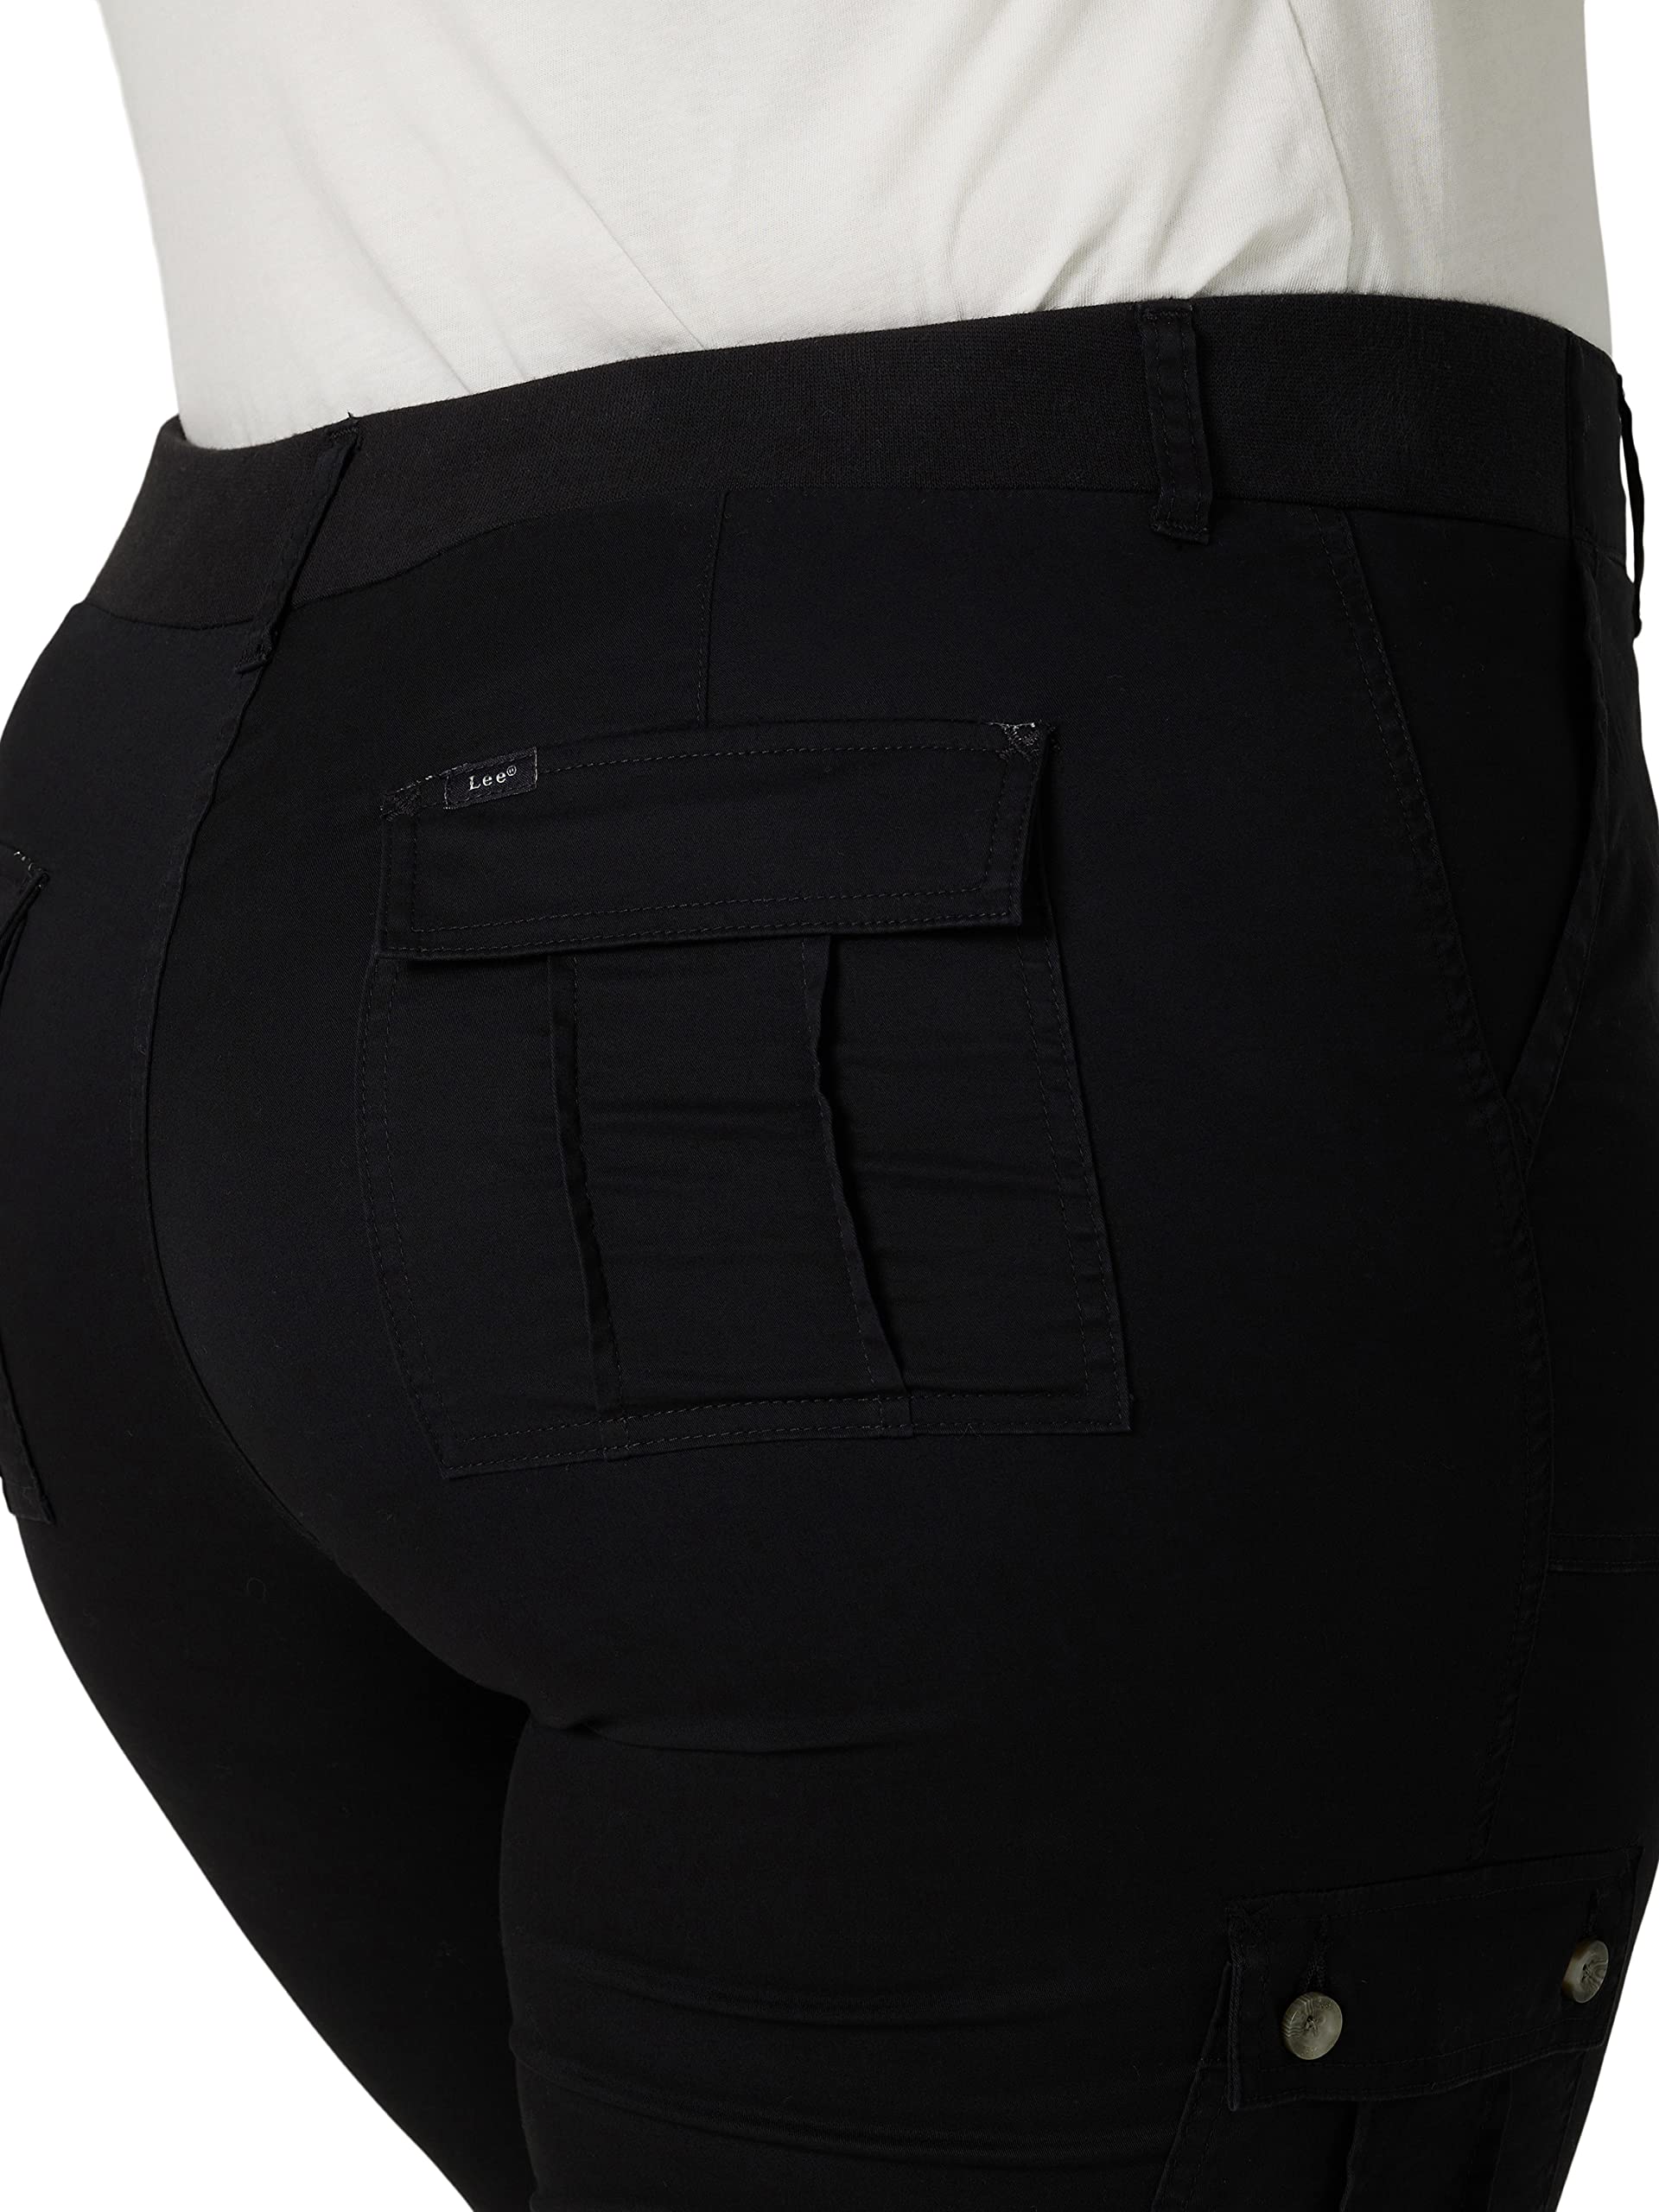 Lee Women's Plus Size Flex-to-go Mid-Rise Relaxed Fit Cargo Capri Pant